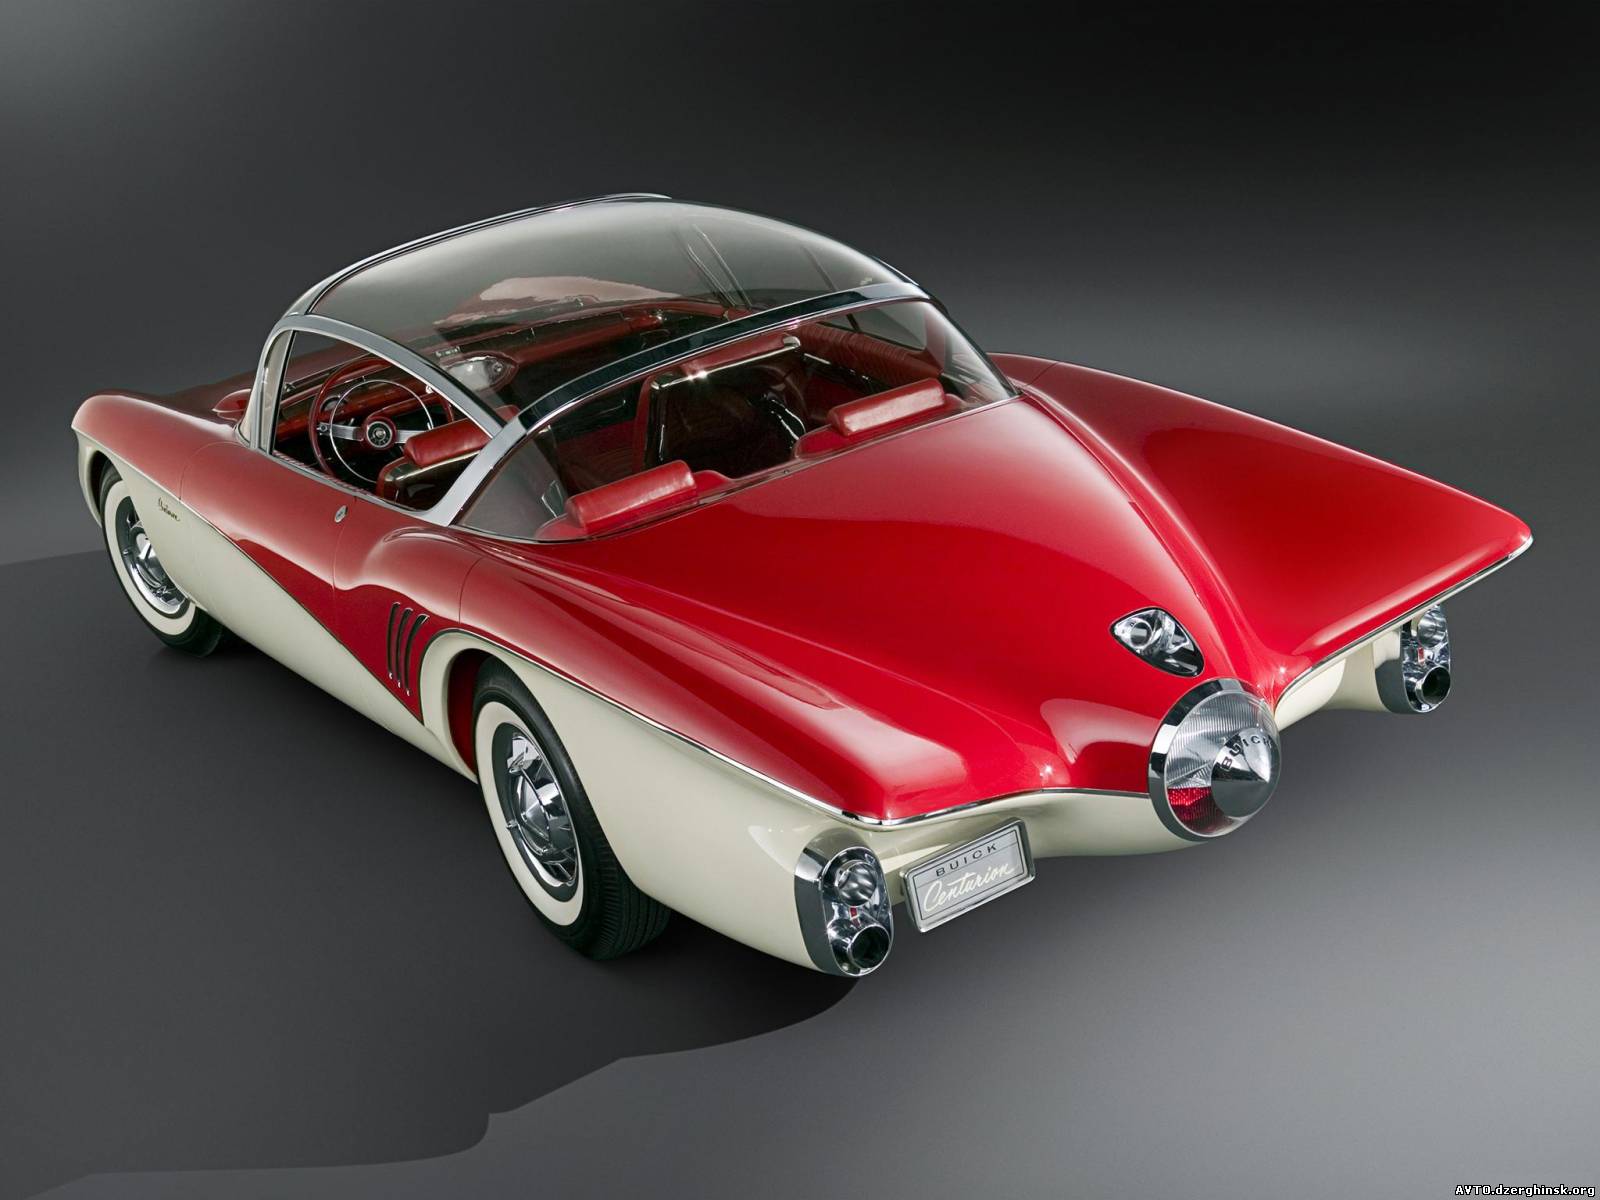 009. Buick Centurion Concept Car  1956